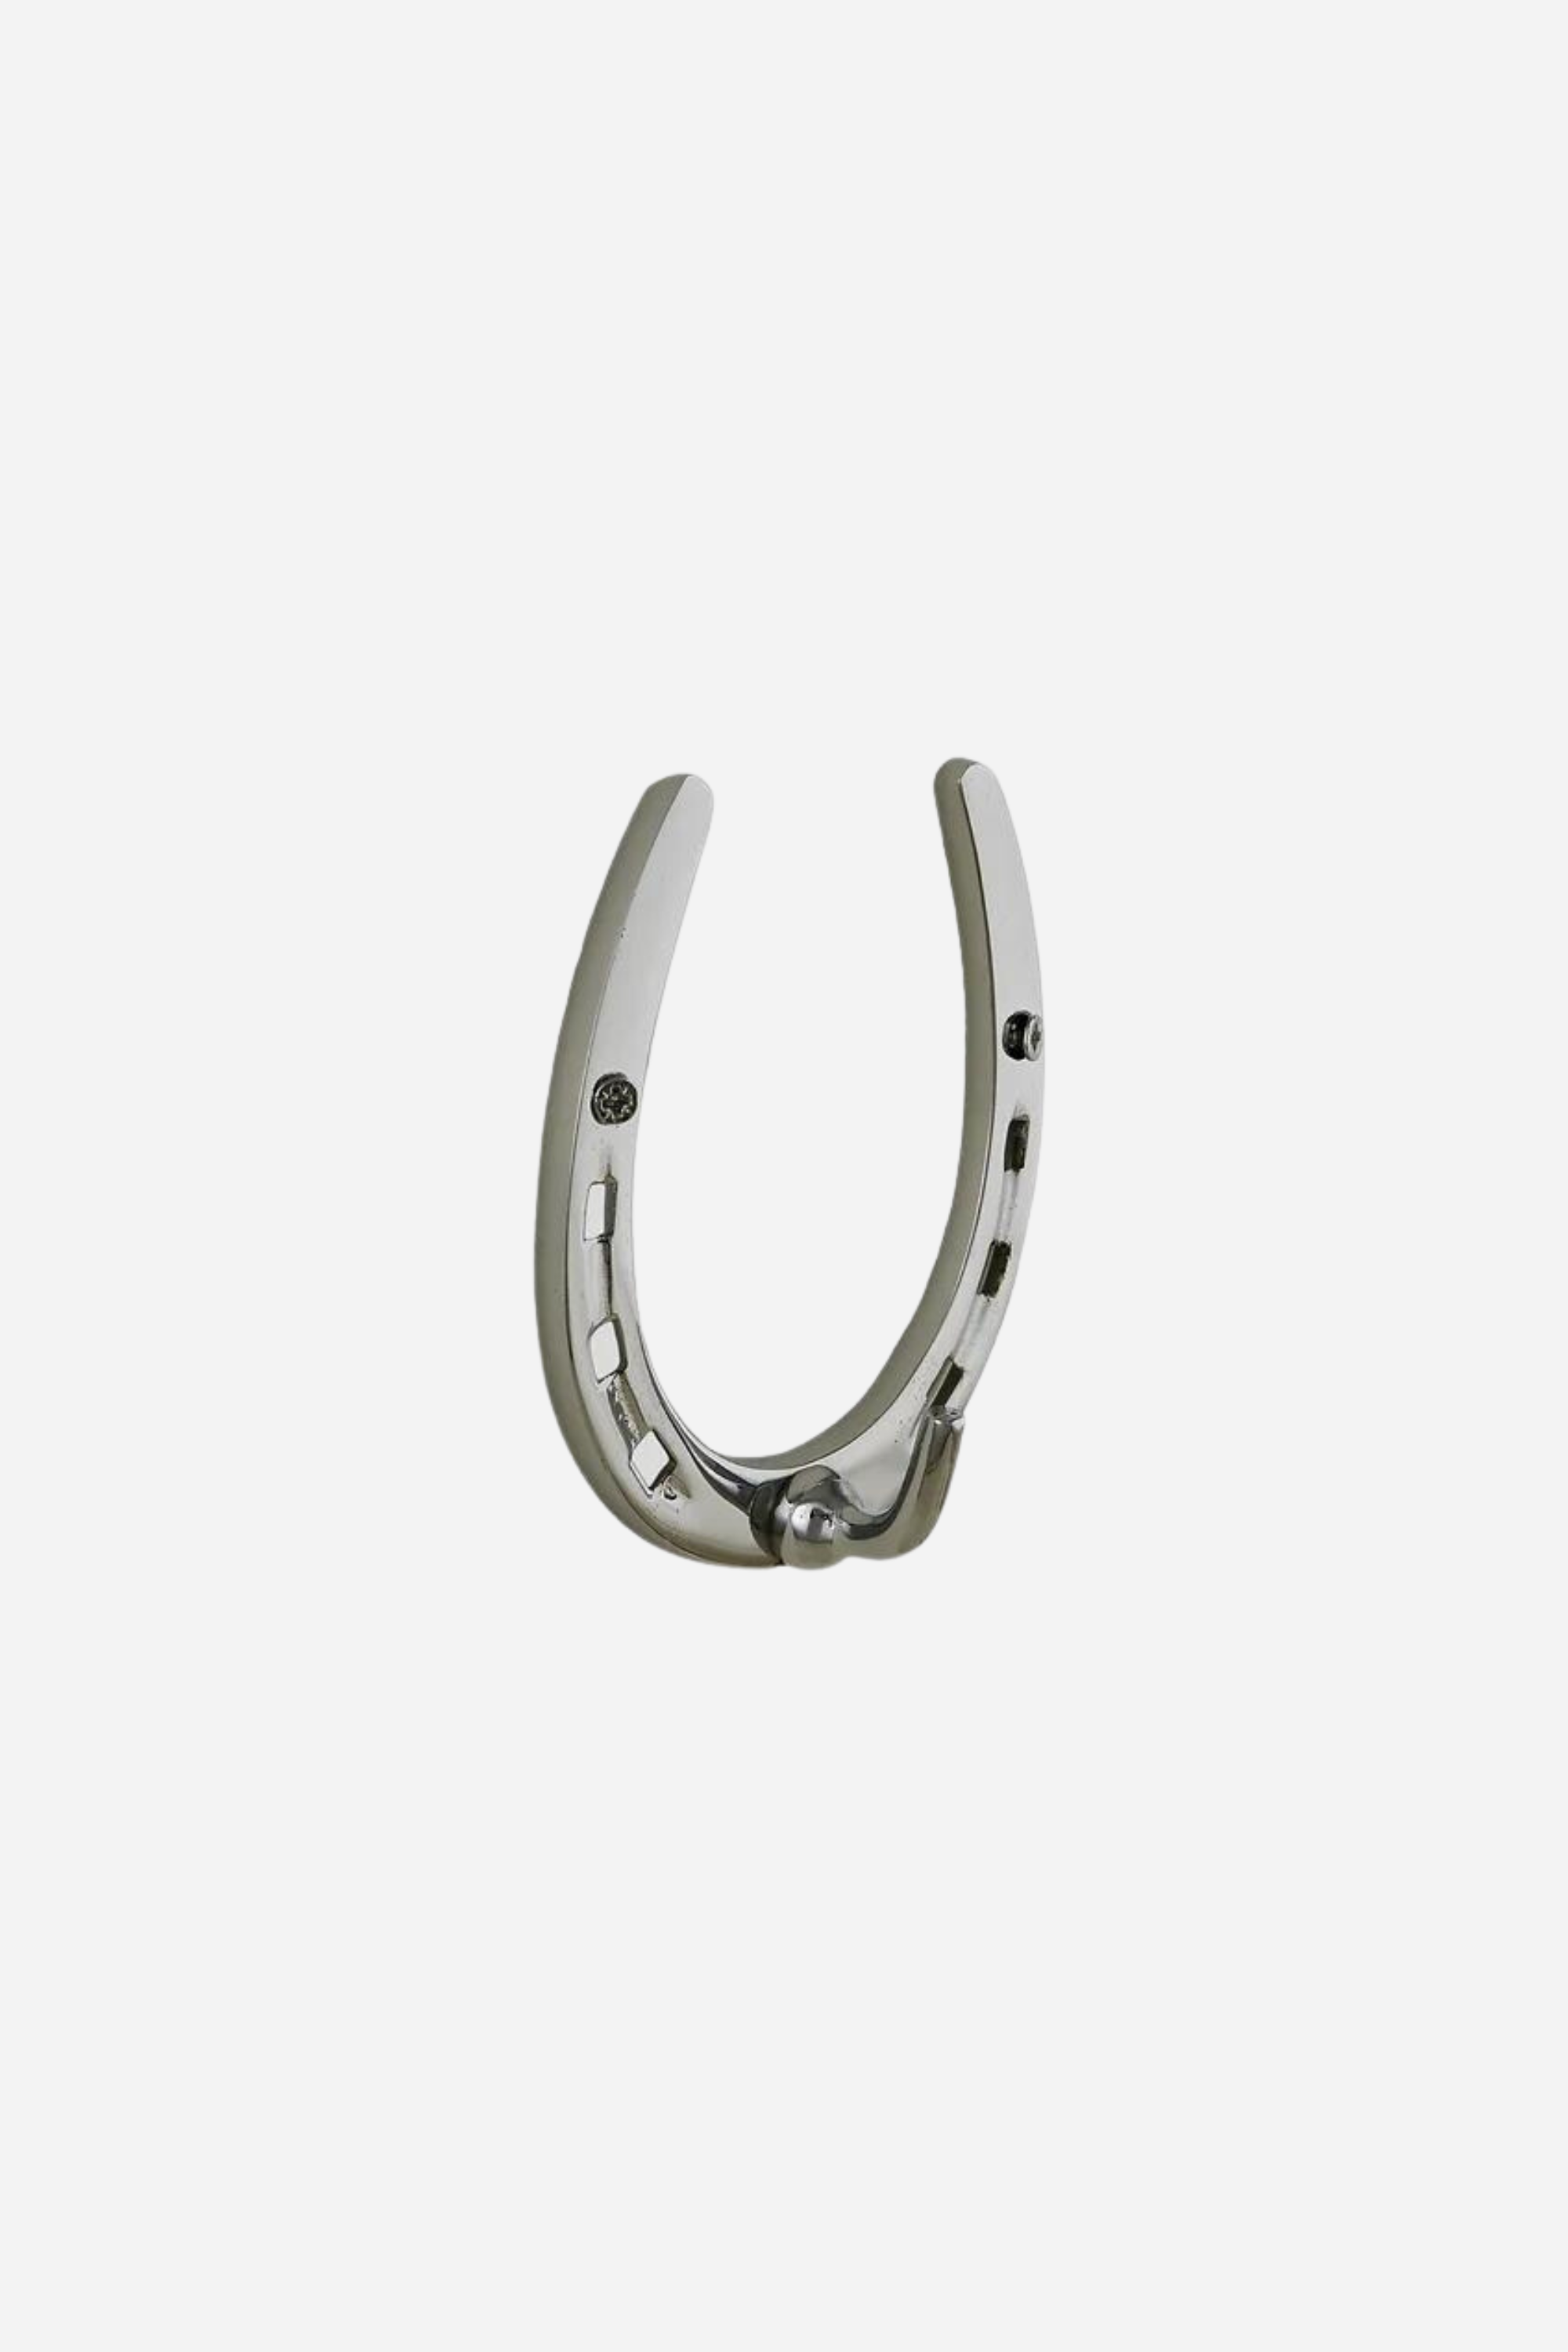 Nora Horse Head Hook – Stylish Equestrian